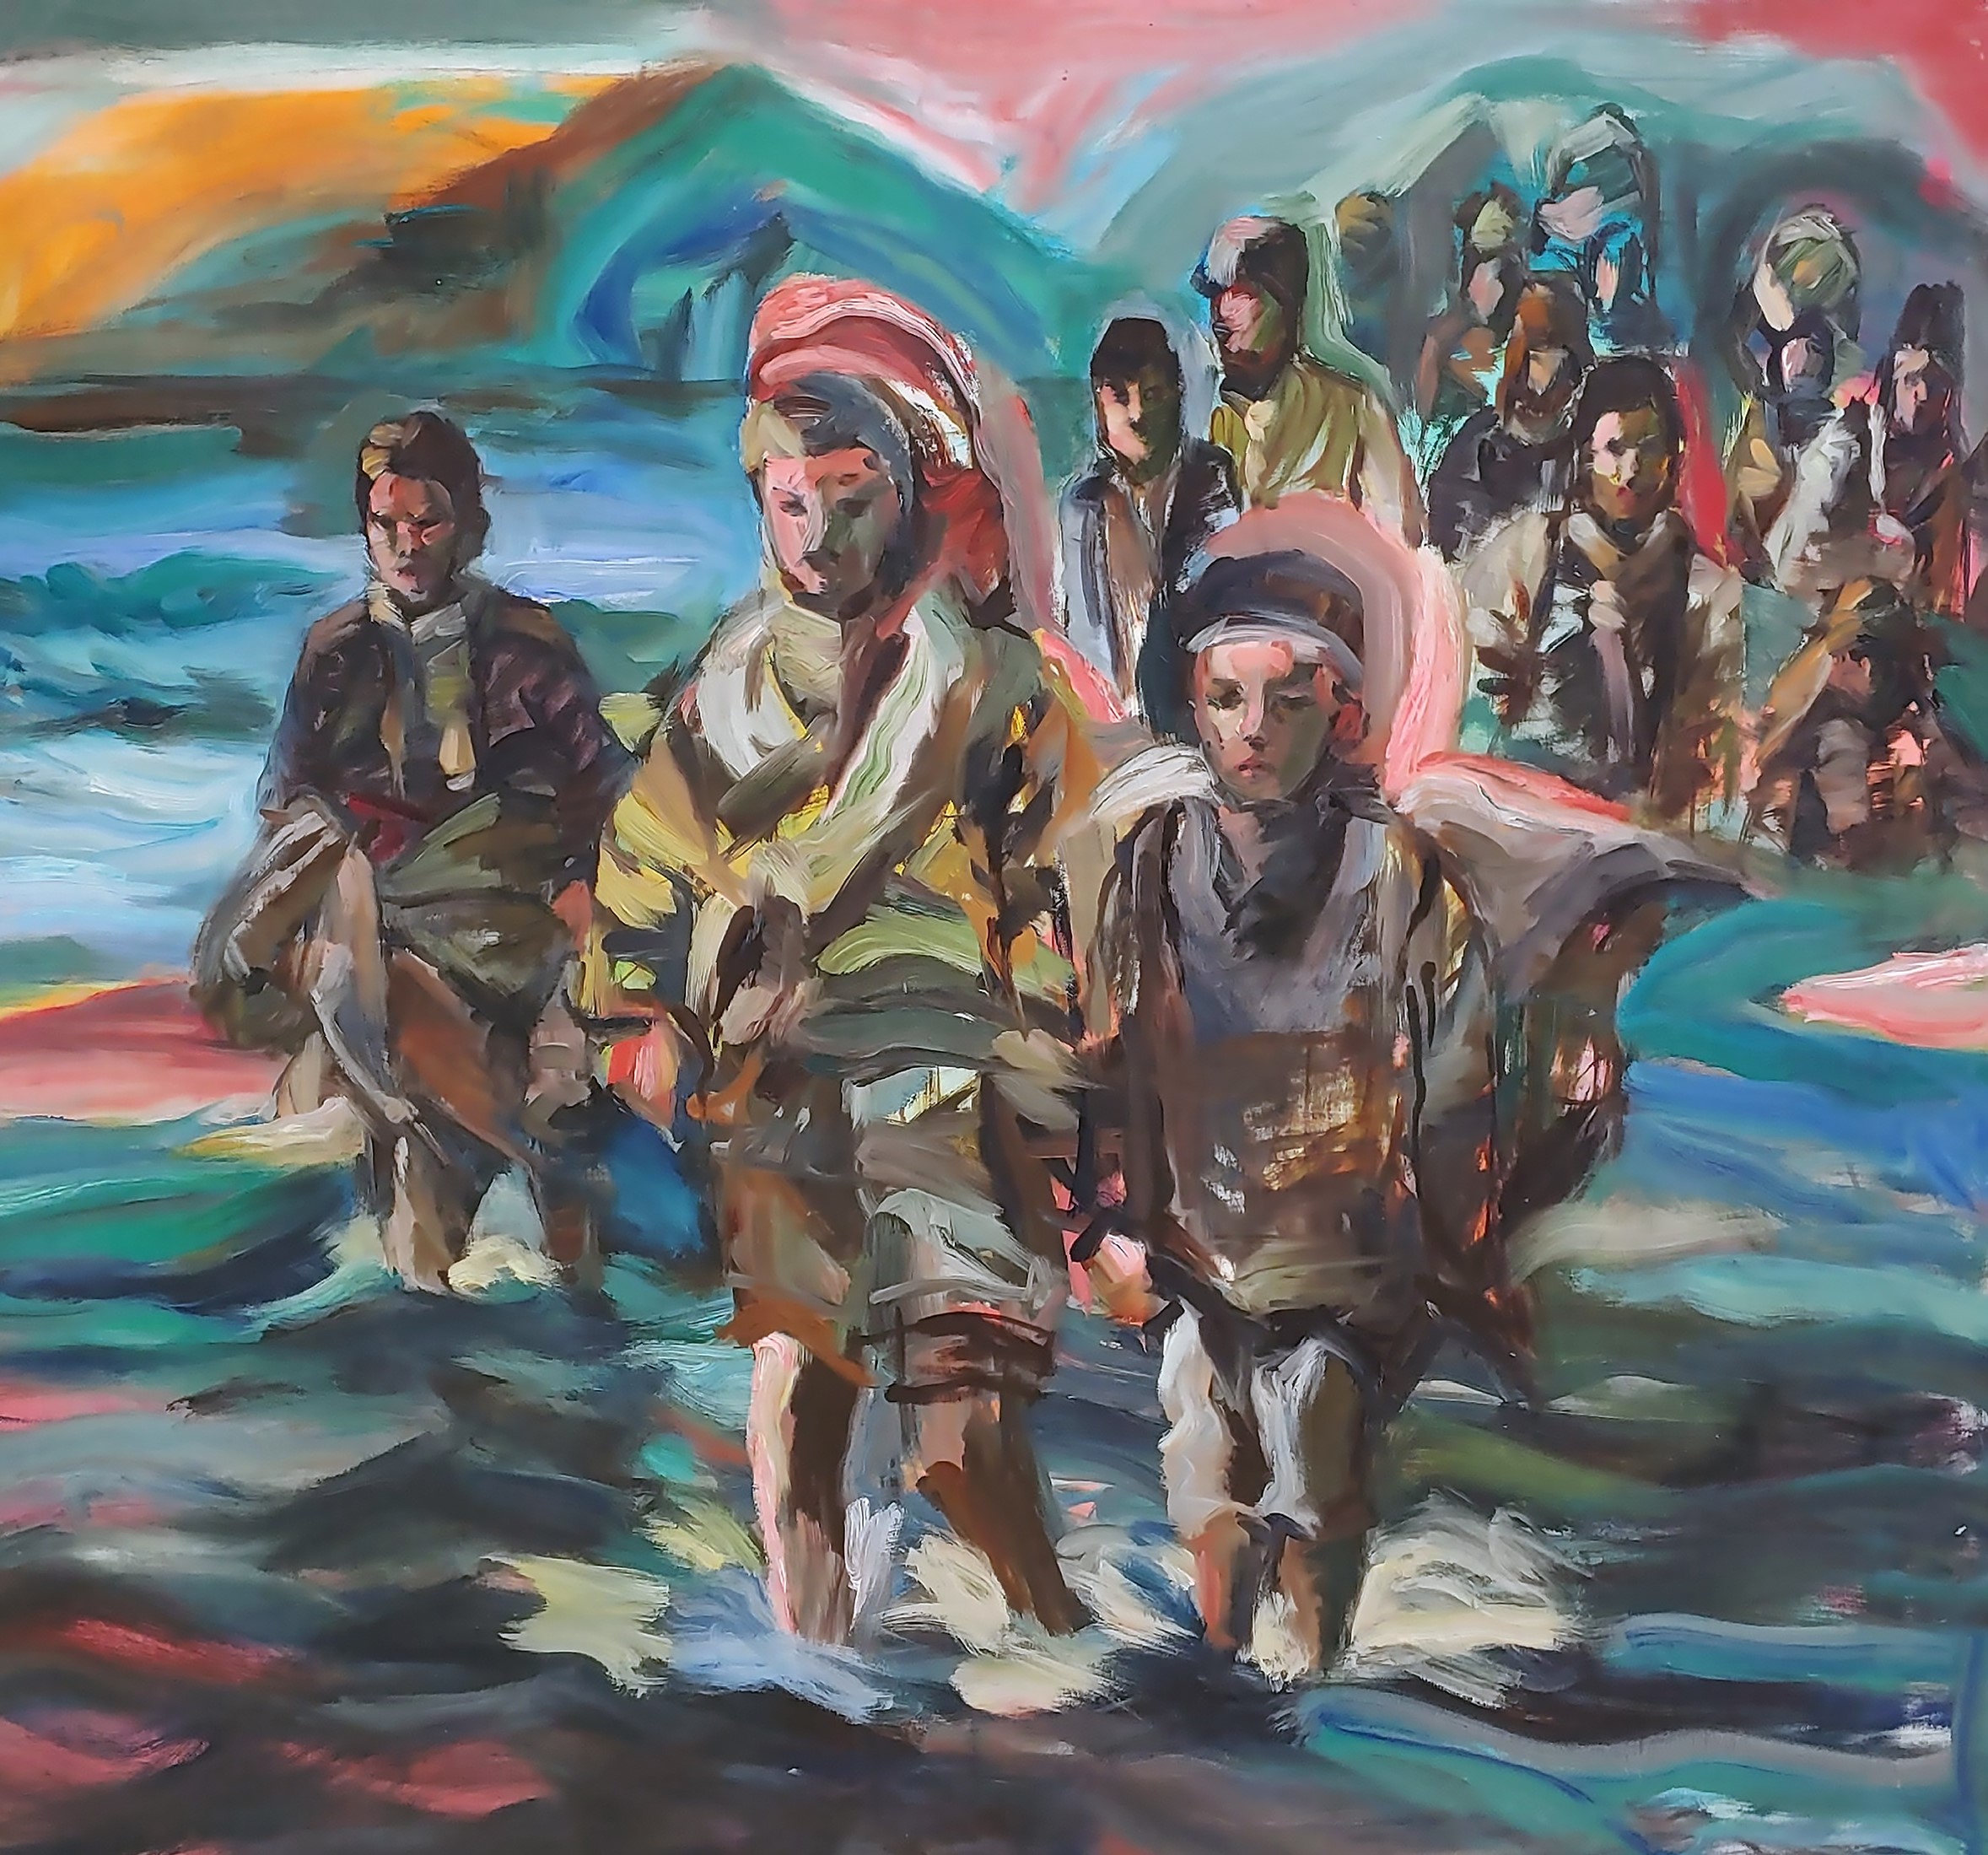 Shinae Kim, "En Marche", Oil on canvas, 48" x 54", 2023.